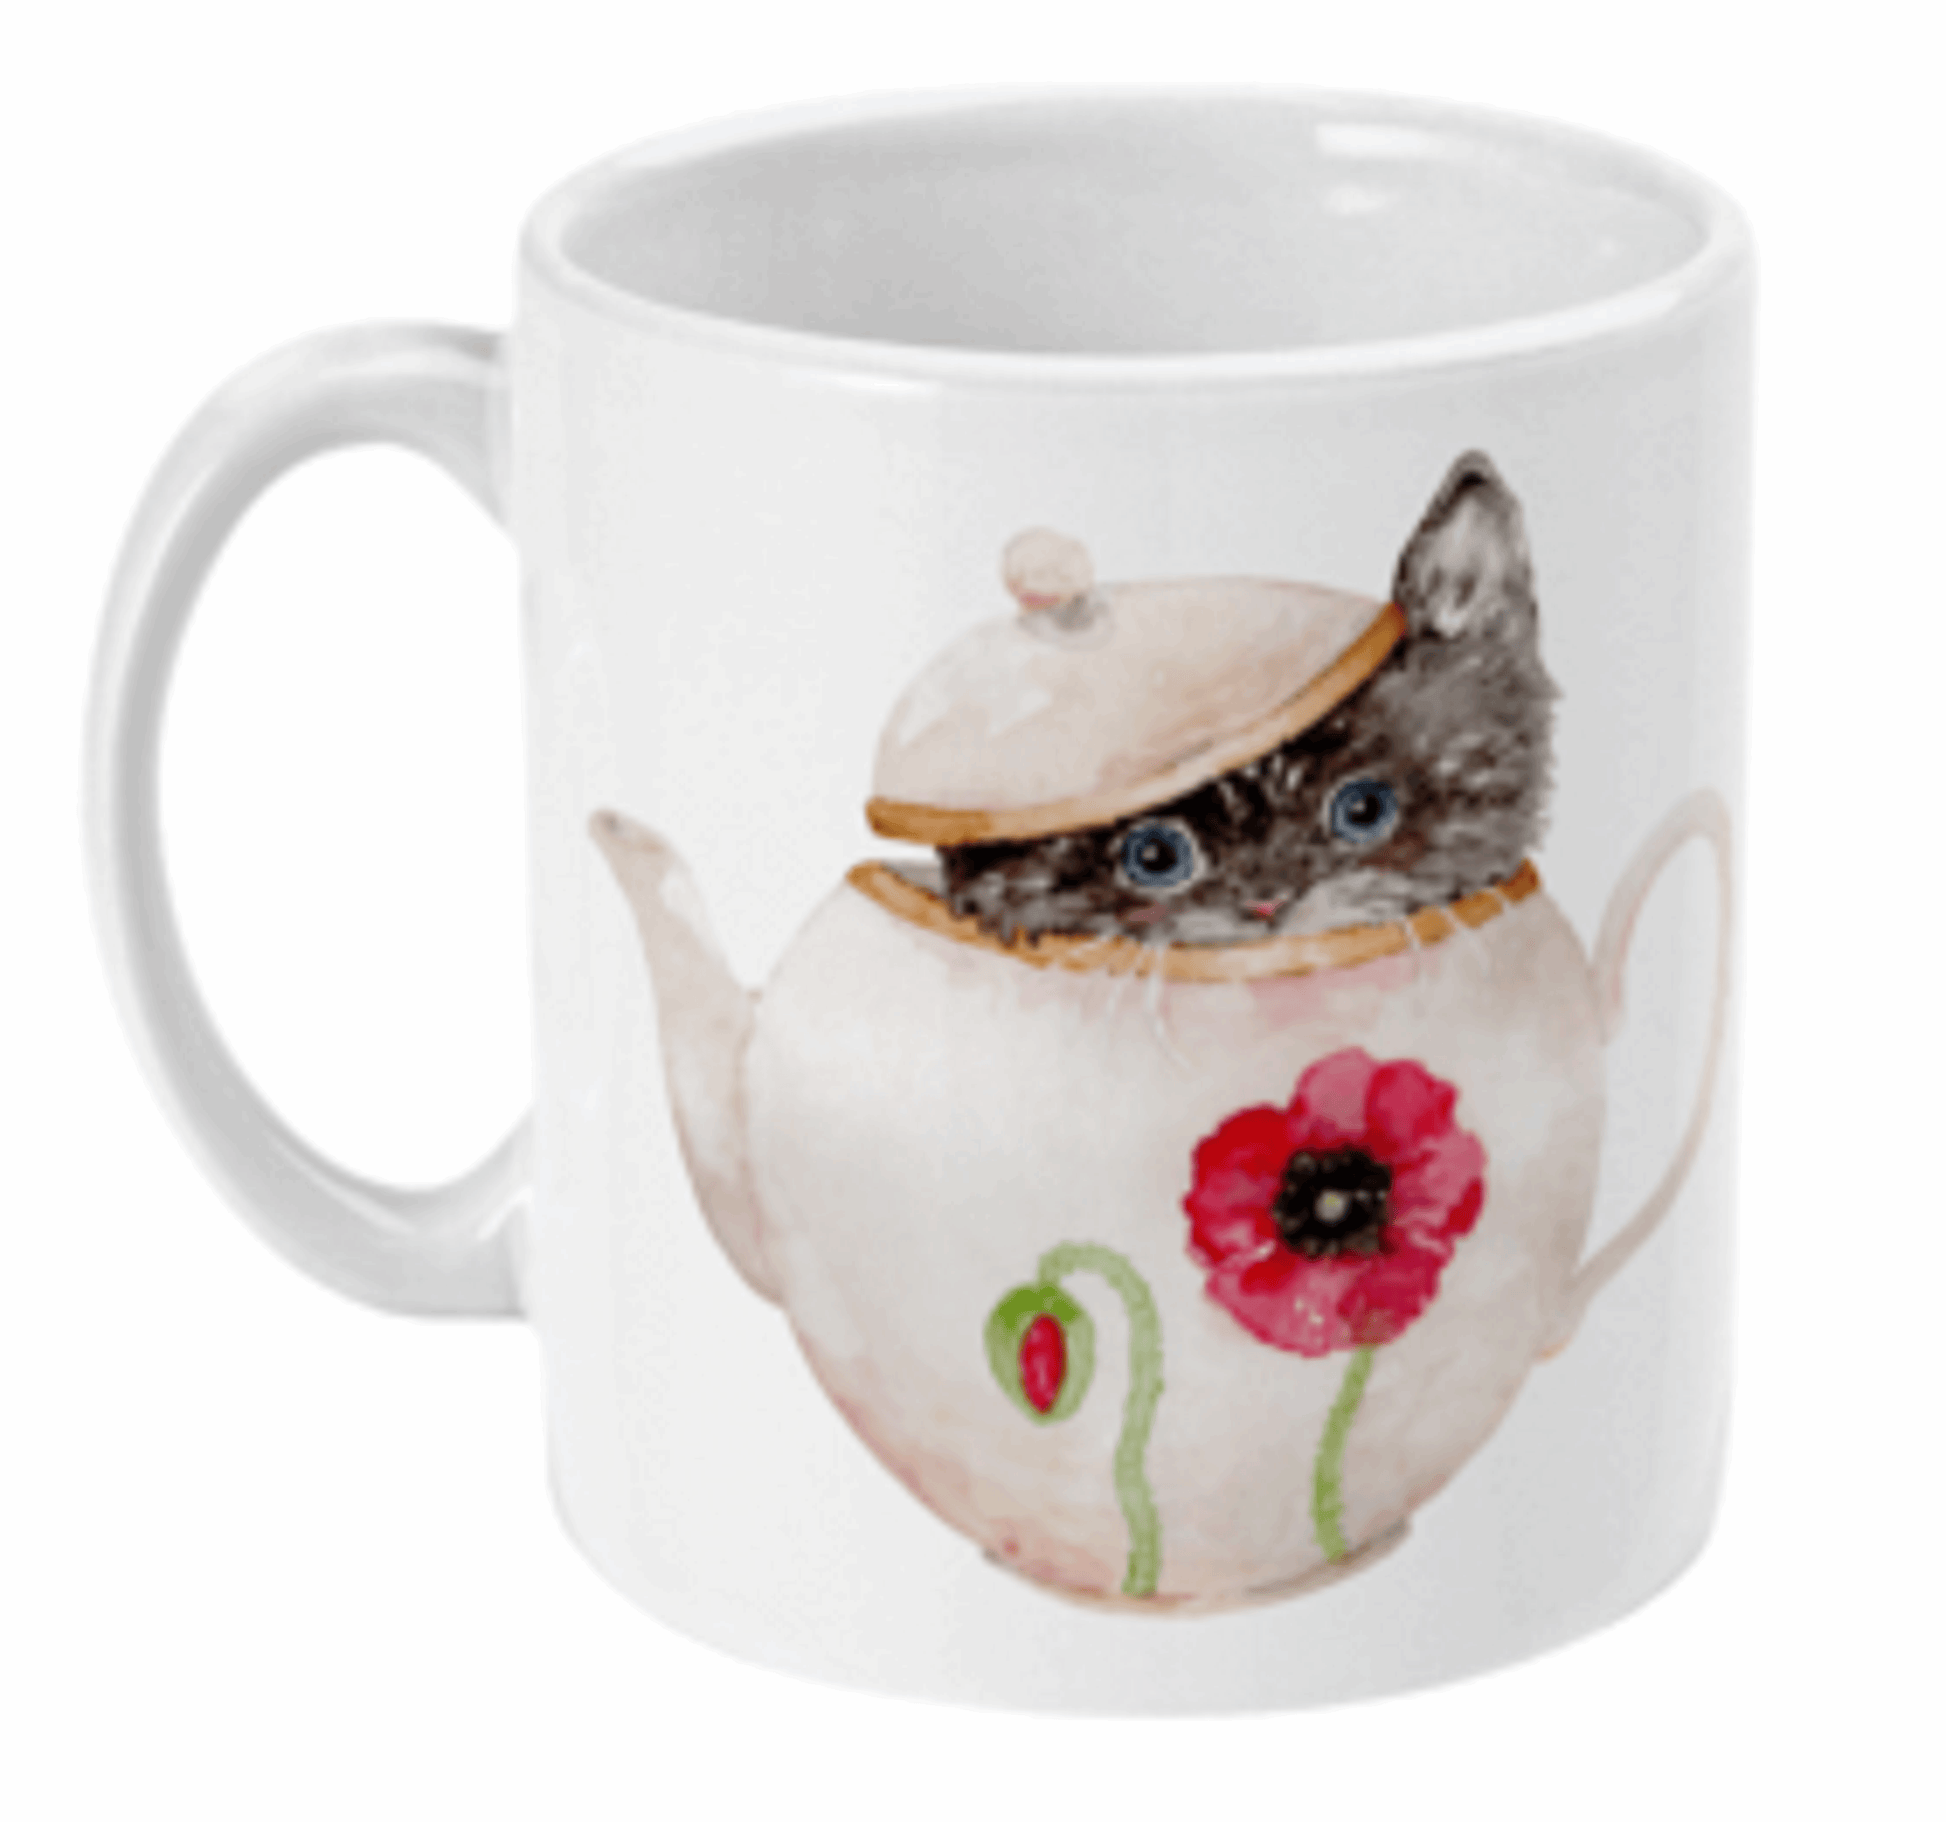  Kitten in a Tea Pot Coffee Mug by Free Spirit Accessories sold by Free Spirit Accessories